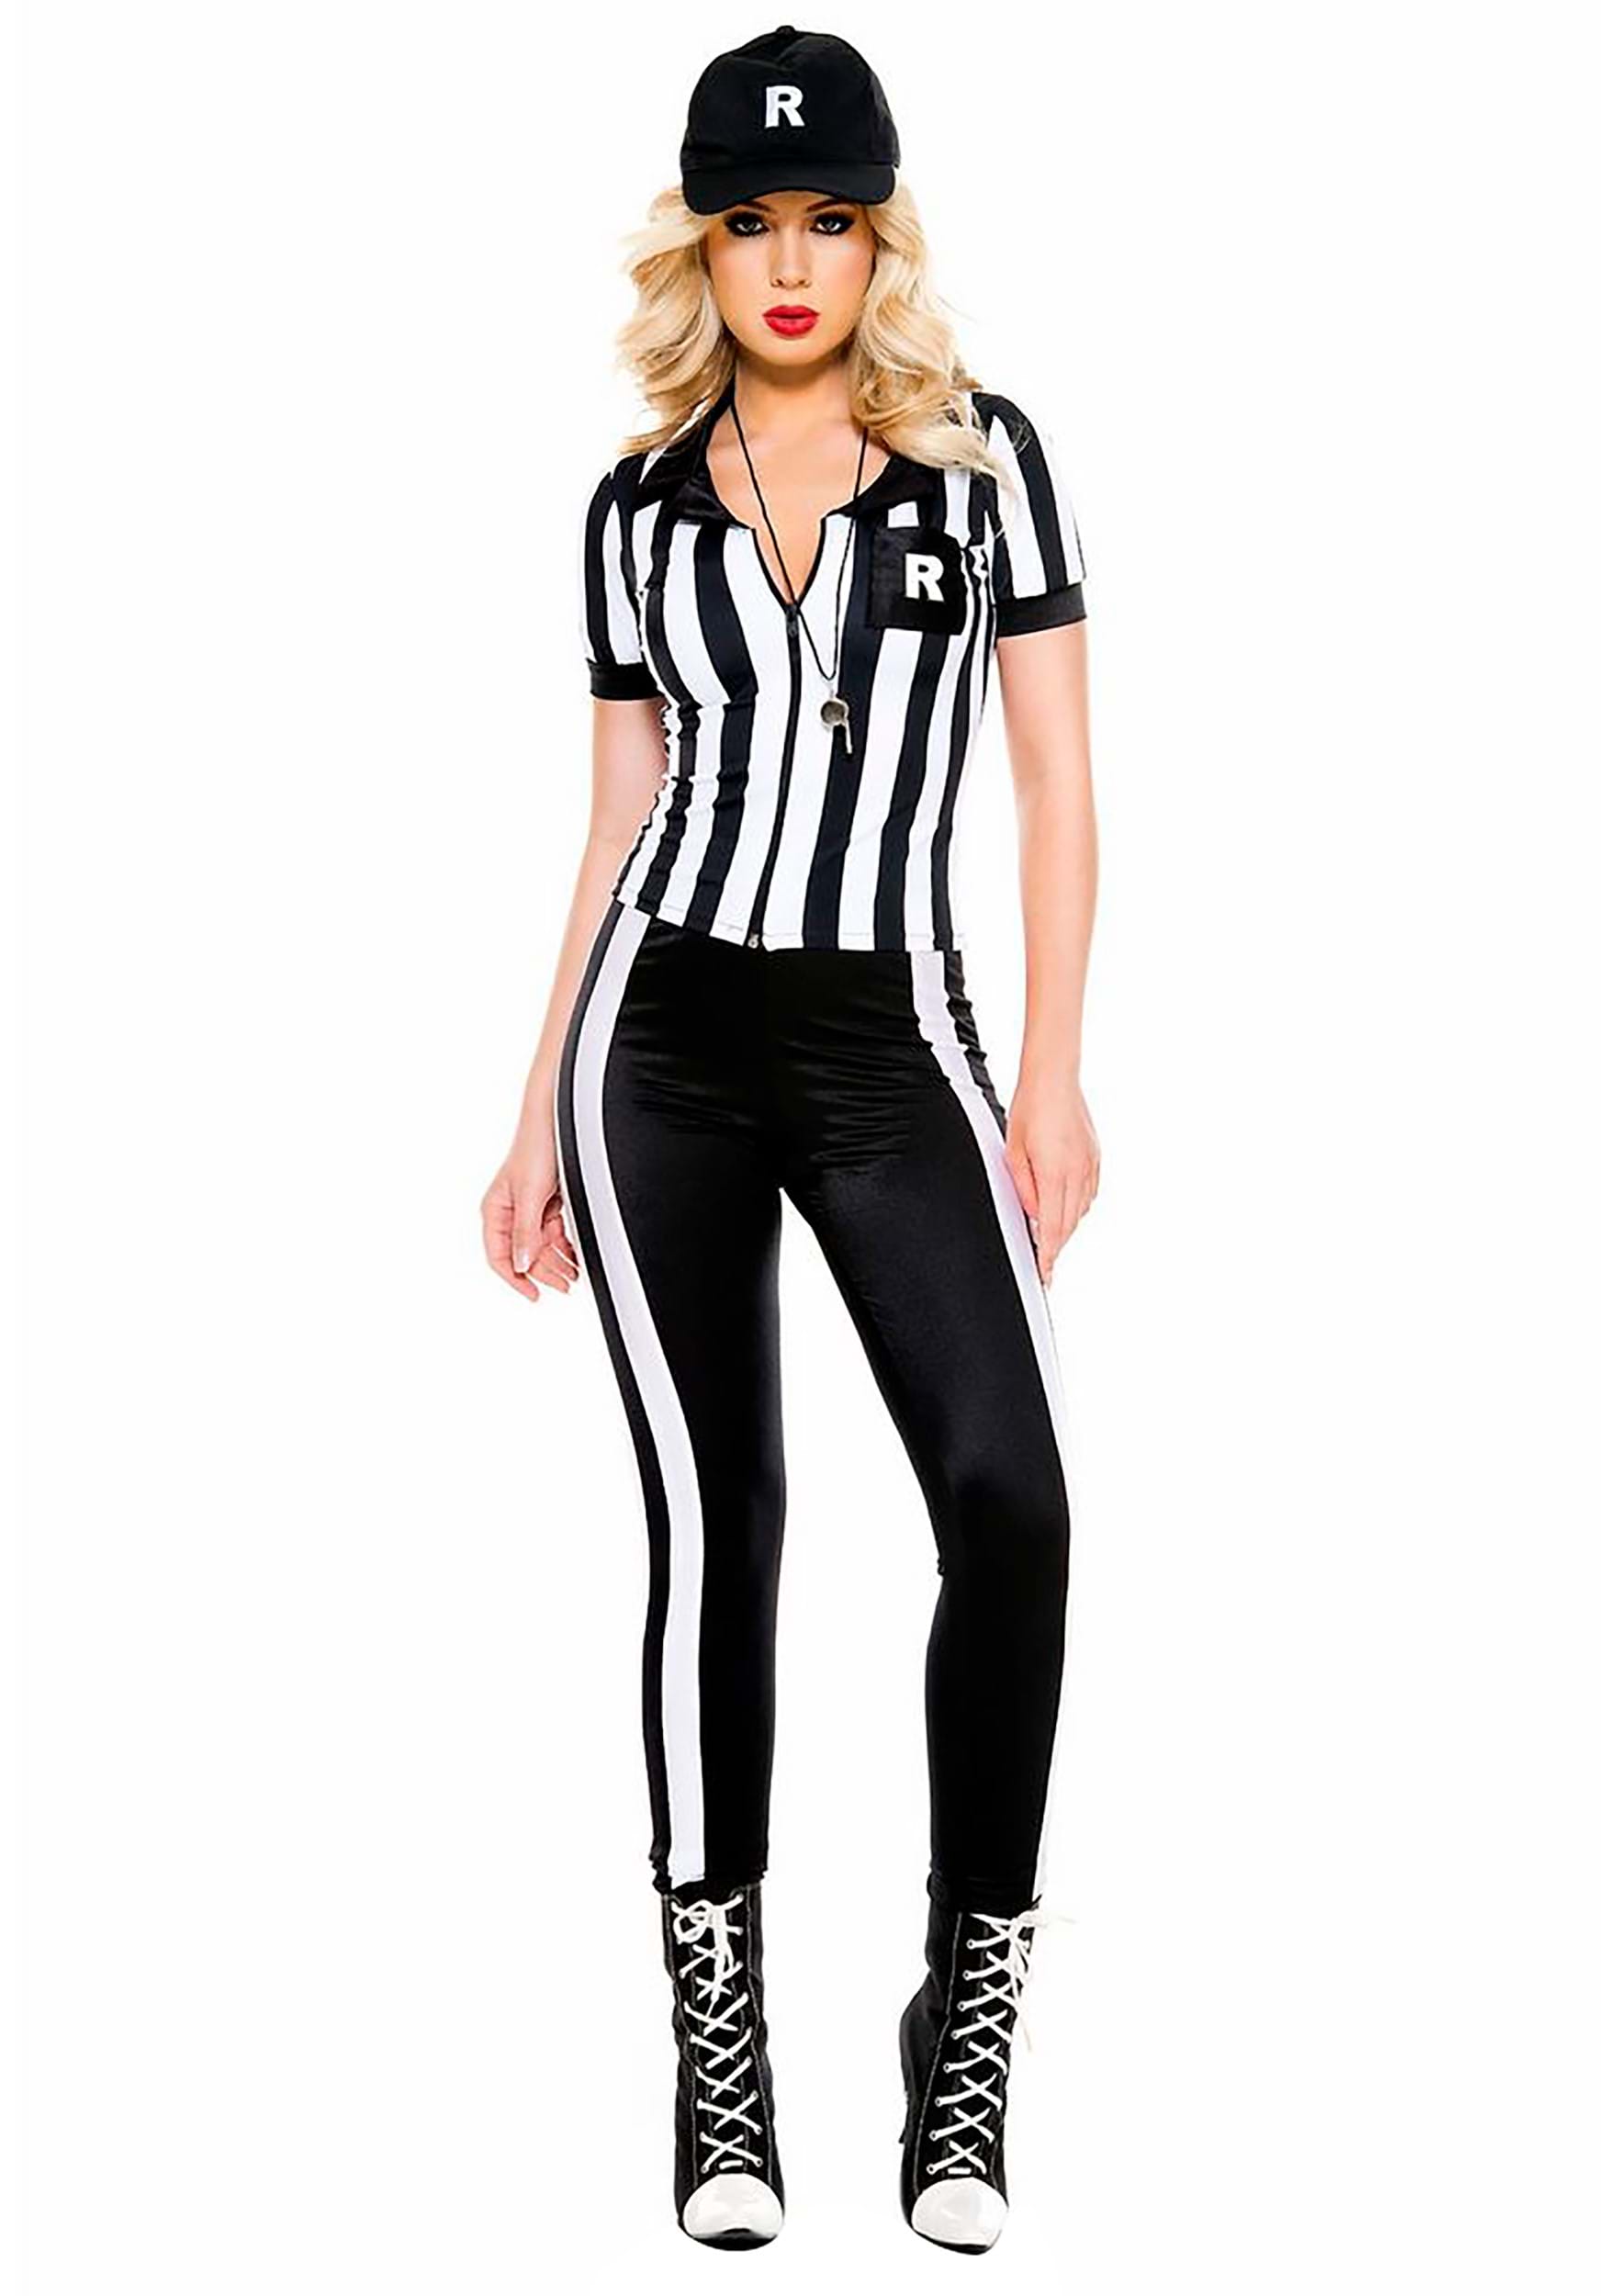 Womens Referee Costume